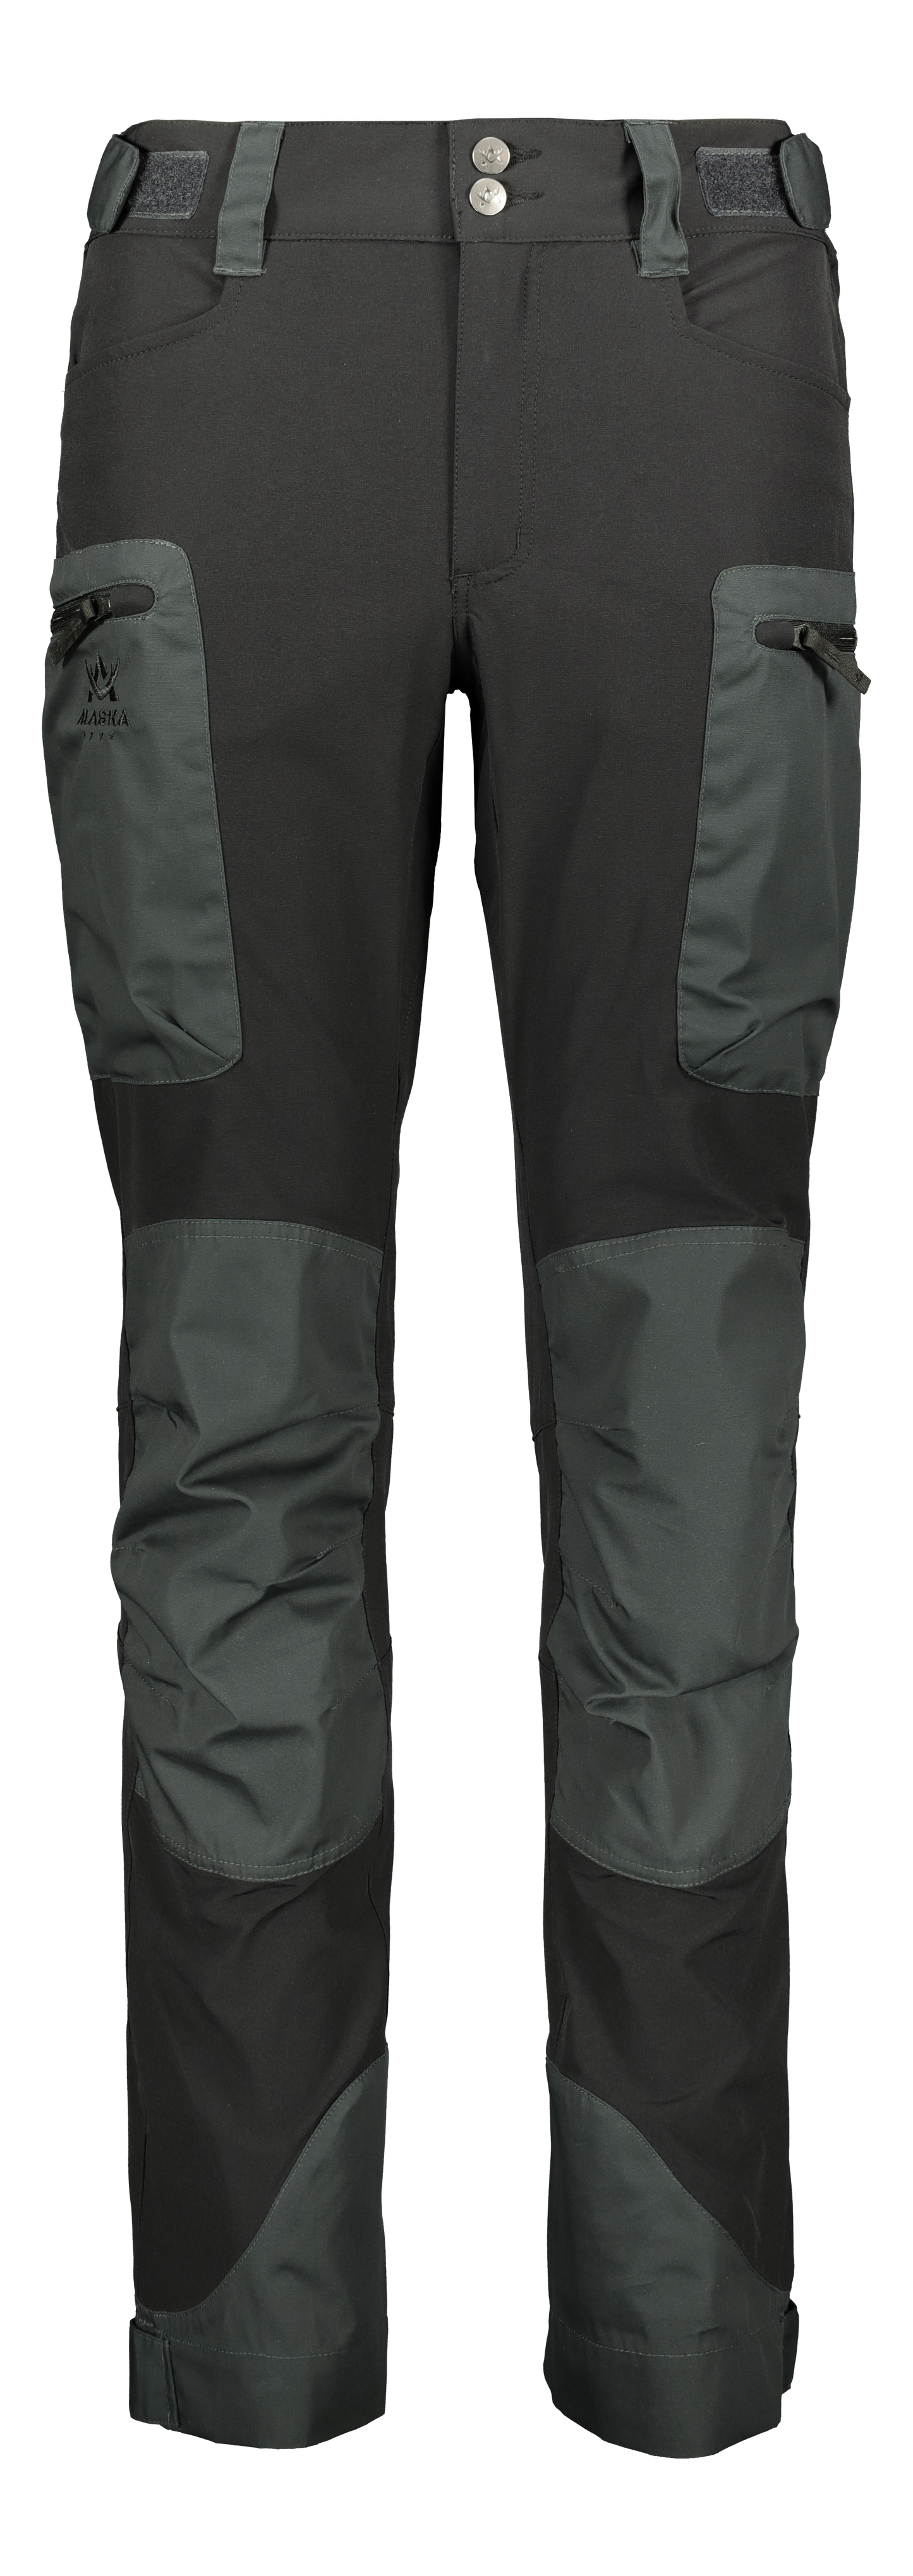 Trekking Lite Women's Trousers, Black / Charcoal